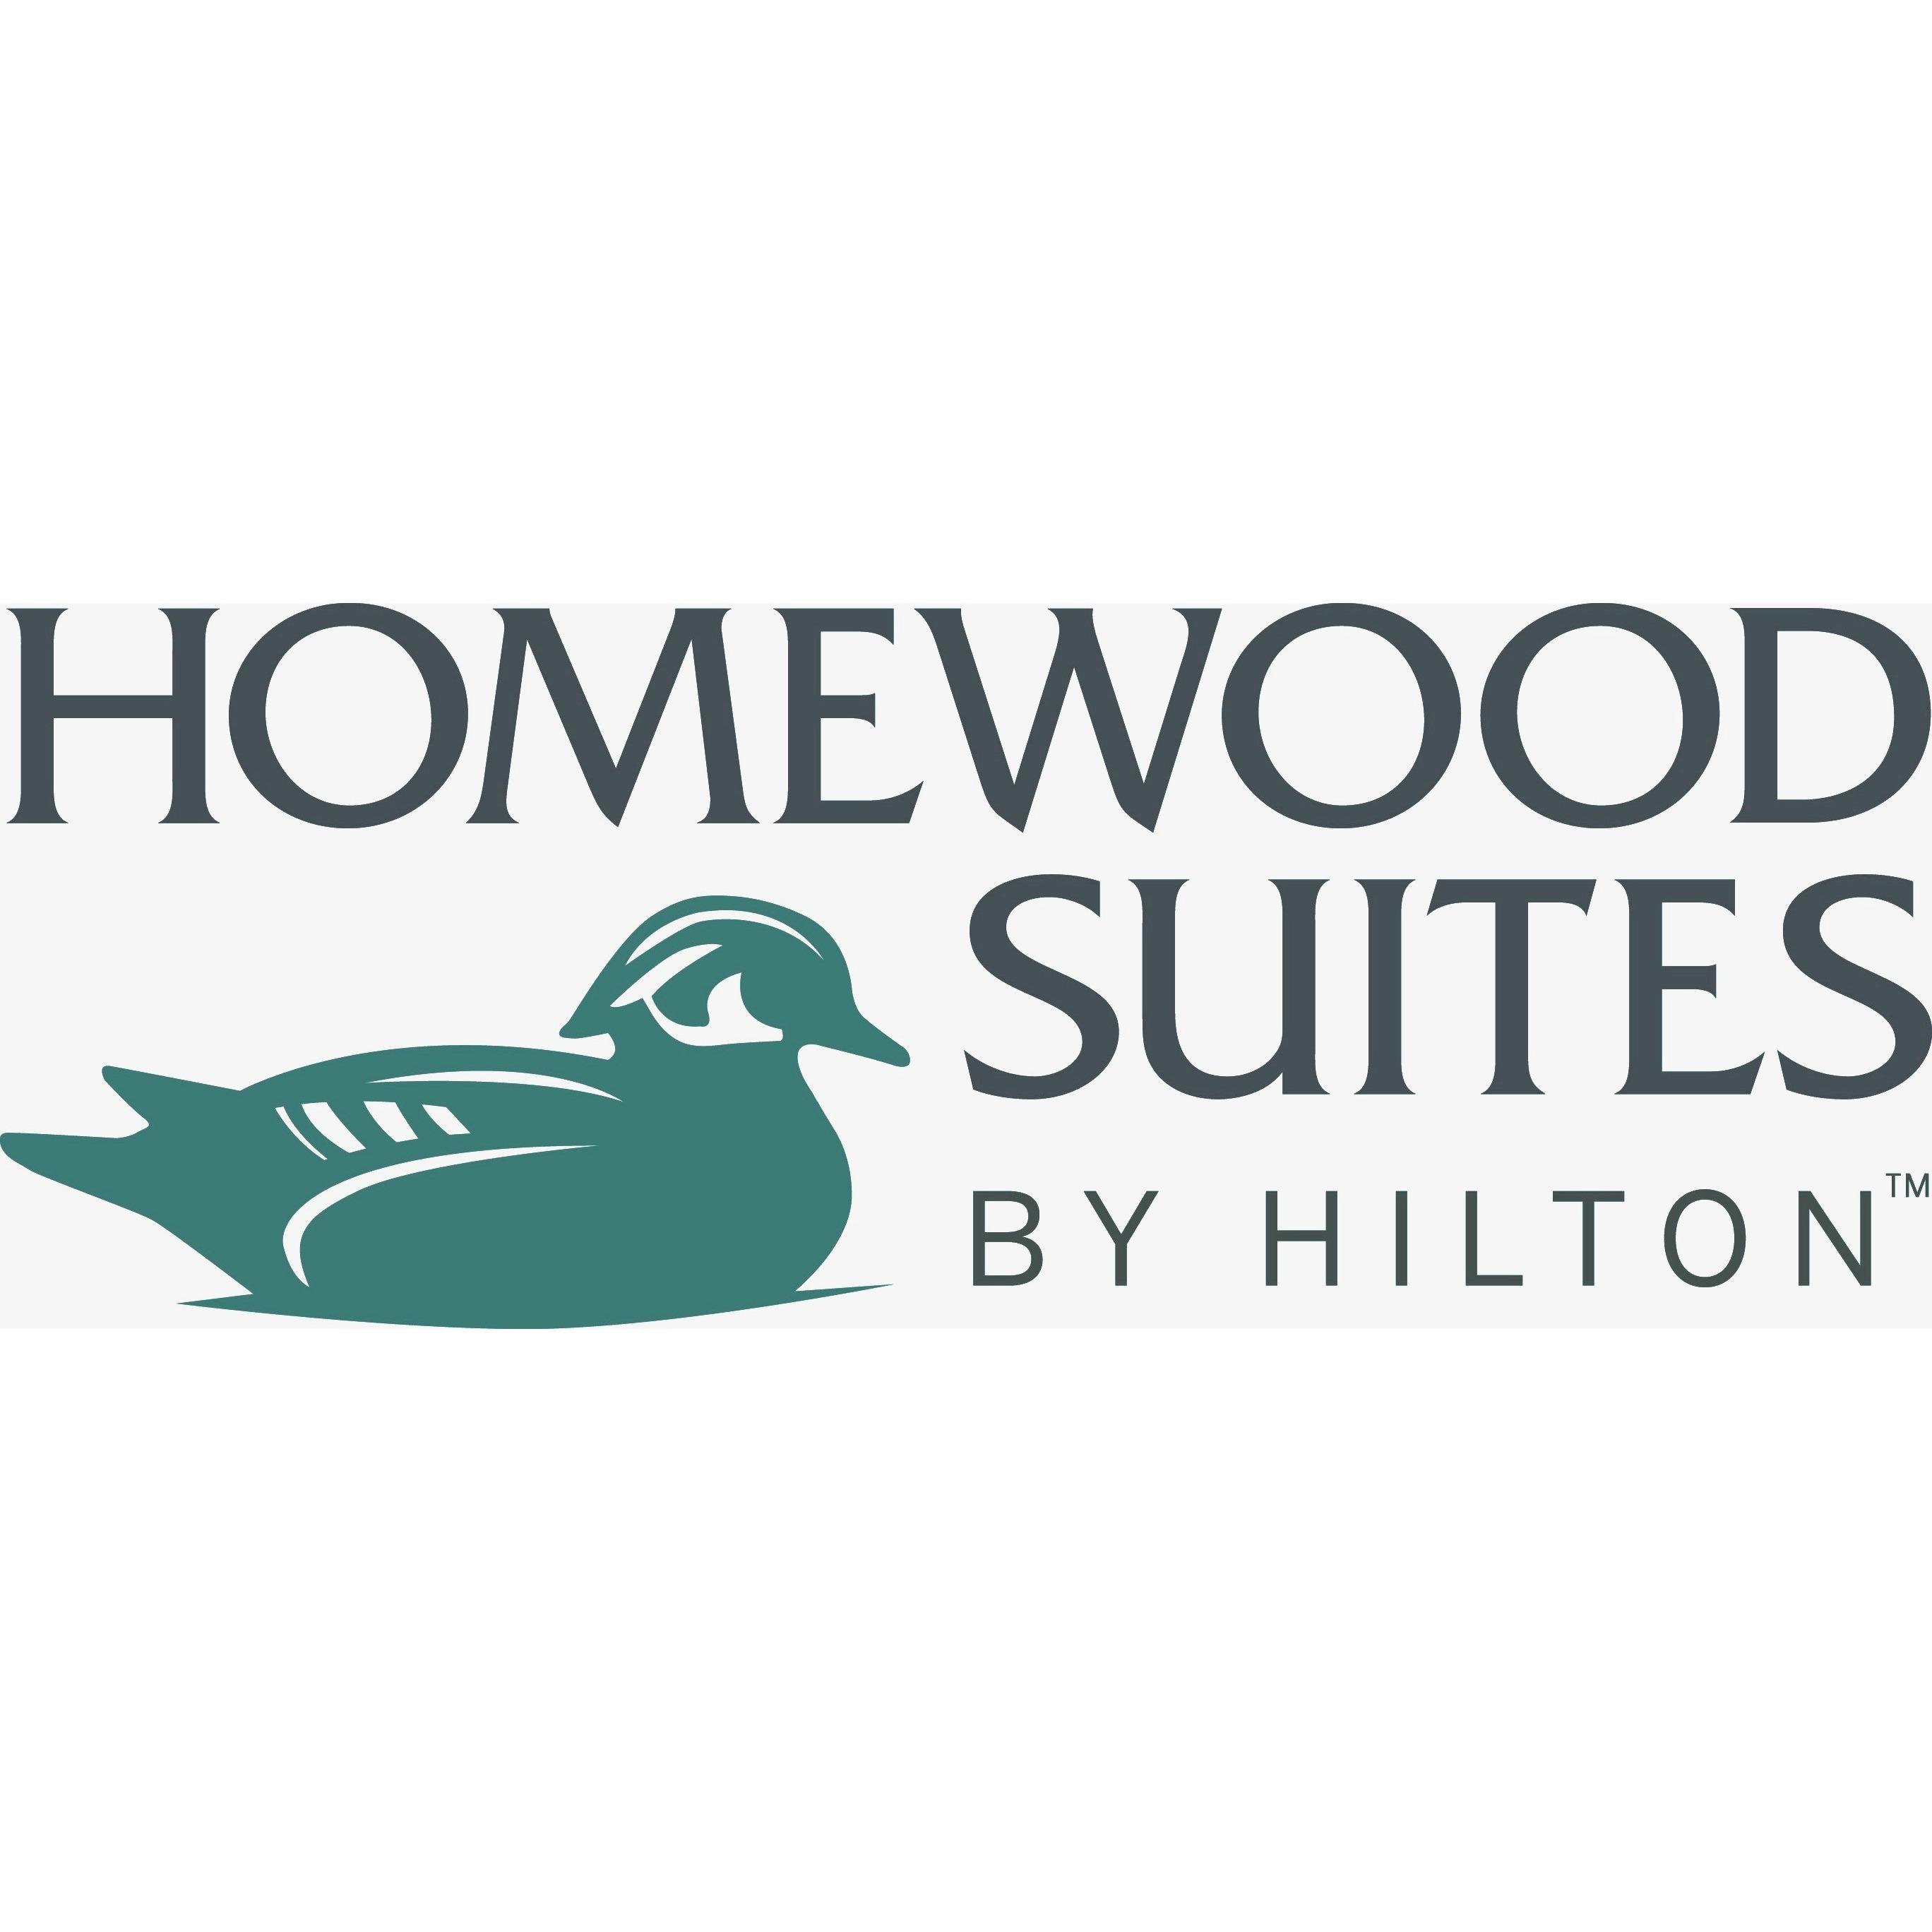 Homewood Suites by Hilton Gaithersburg/ Washington, DC North - Gaithersburg, MD 20879 - (301)670-0008 | ShowMeLocal.com